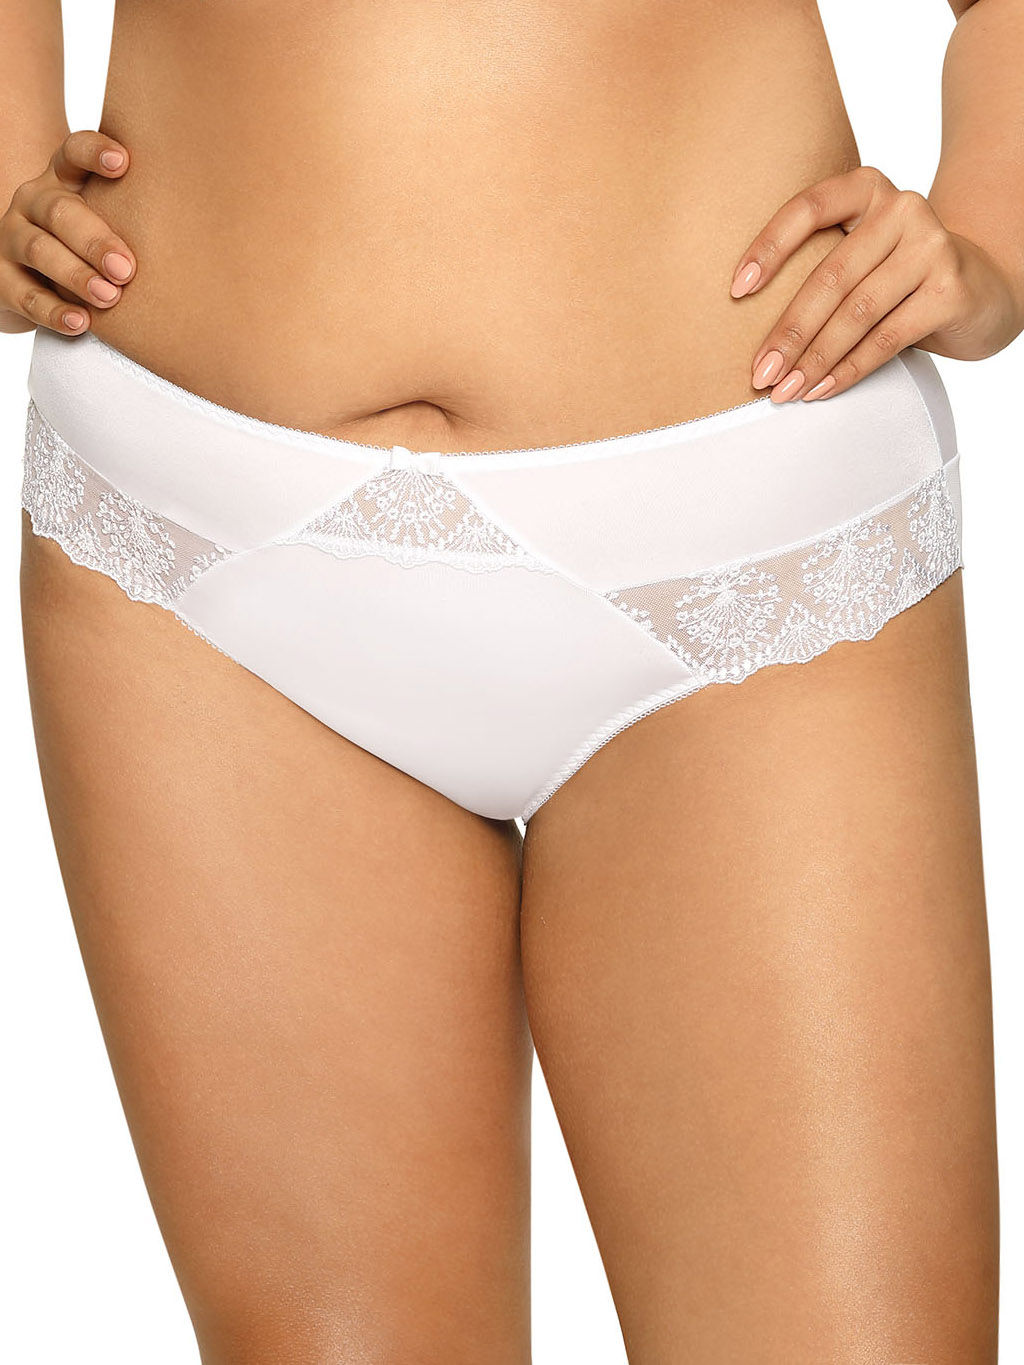 Women's white slip panties with delicate lace Ava 1922 Freesia White